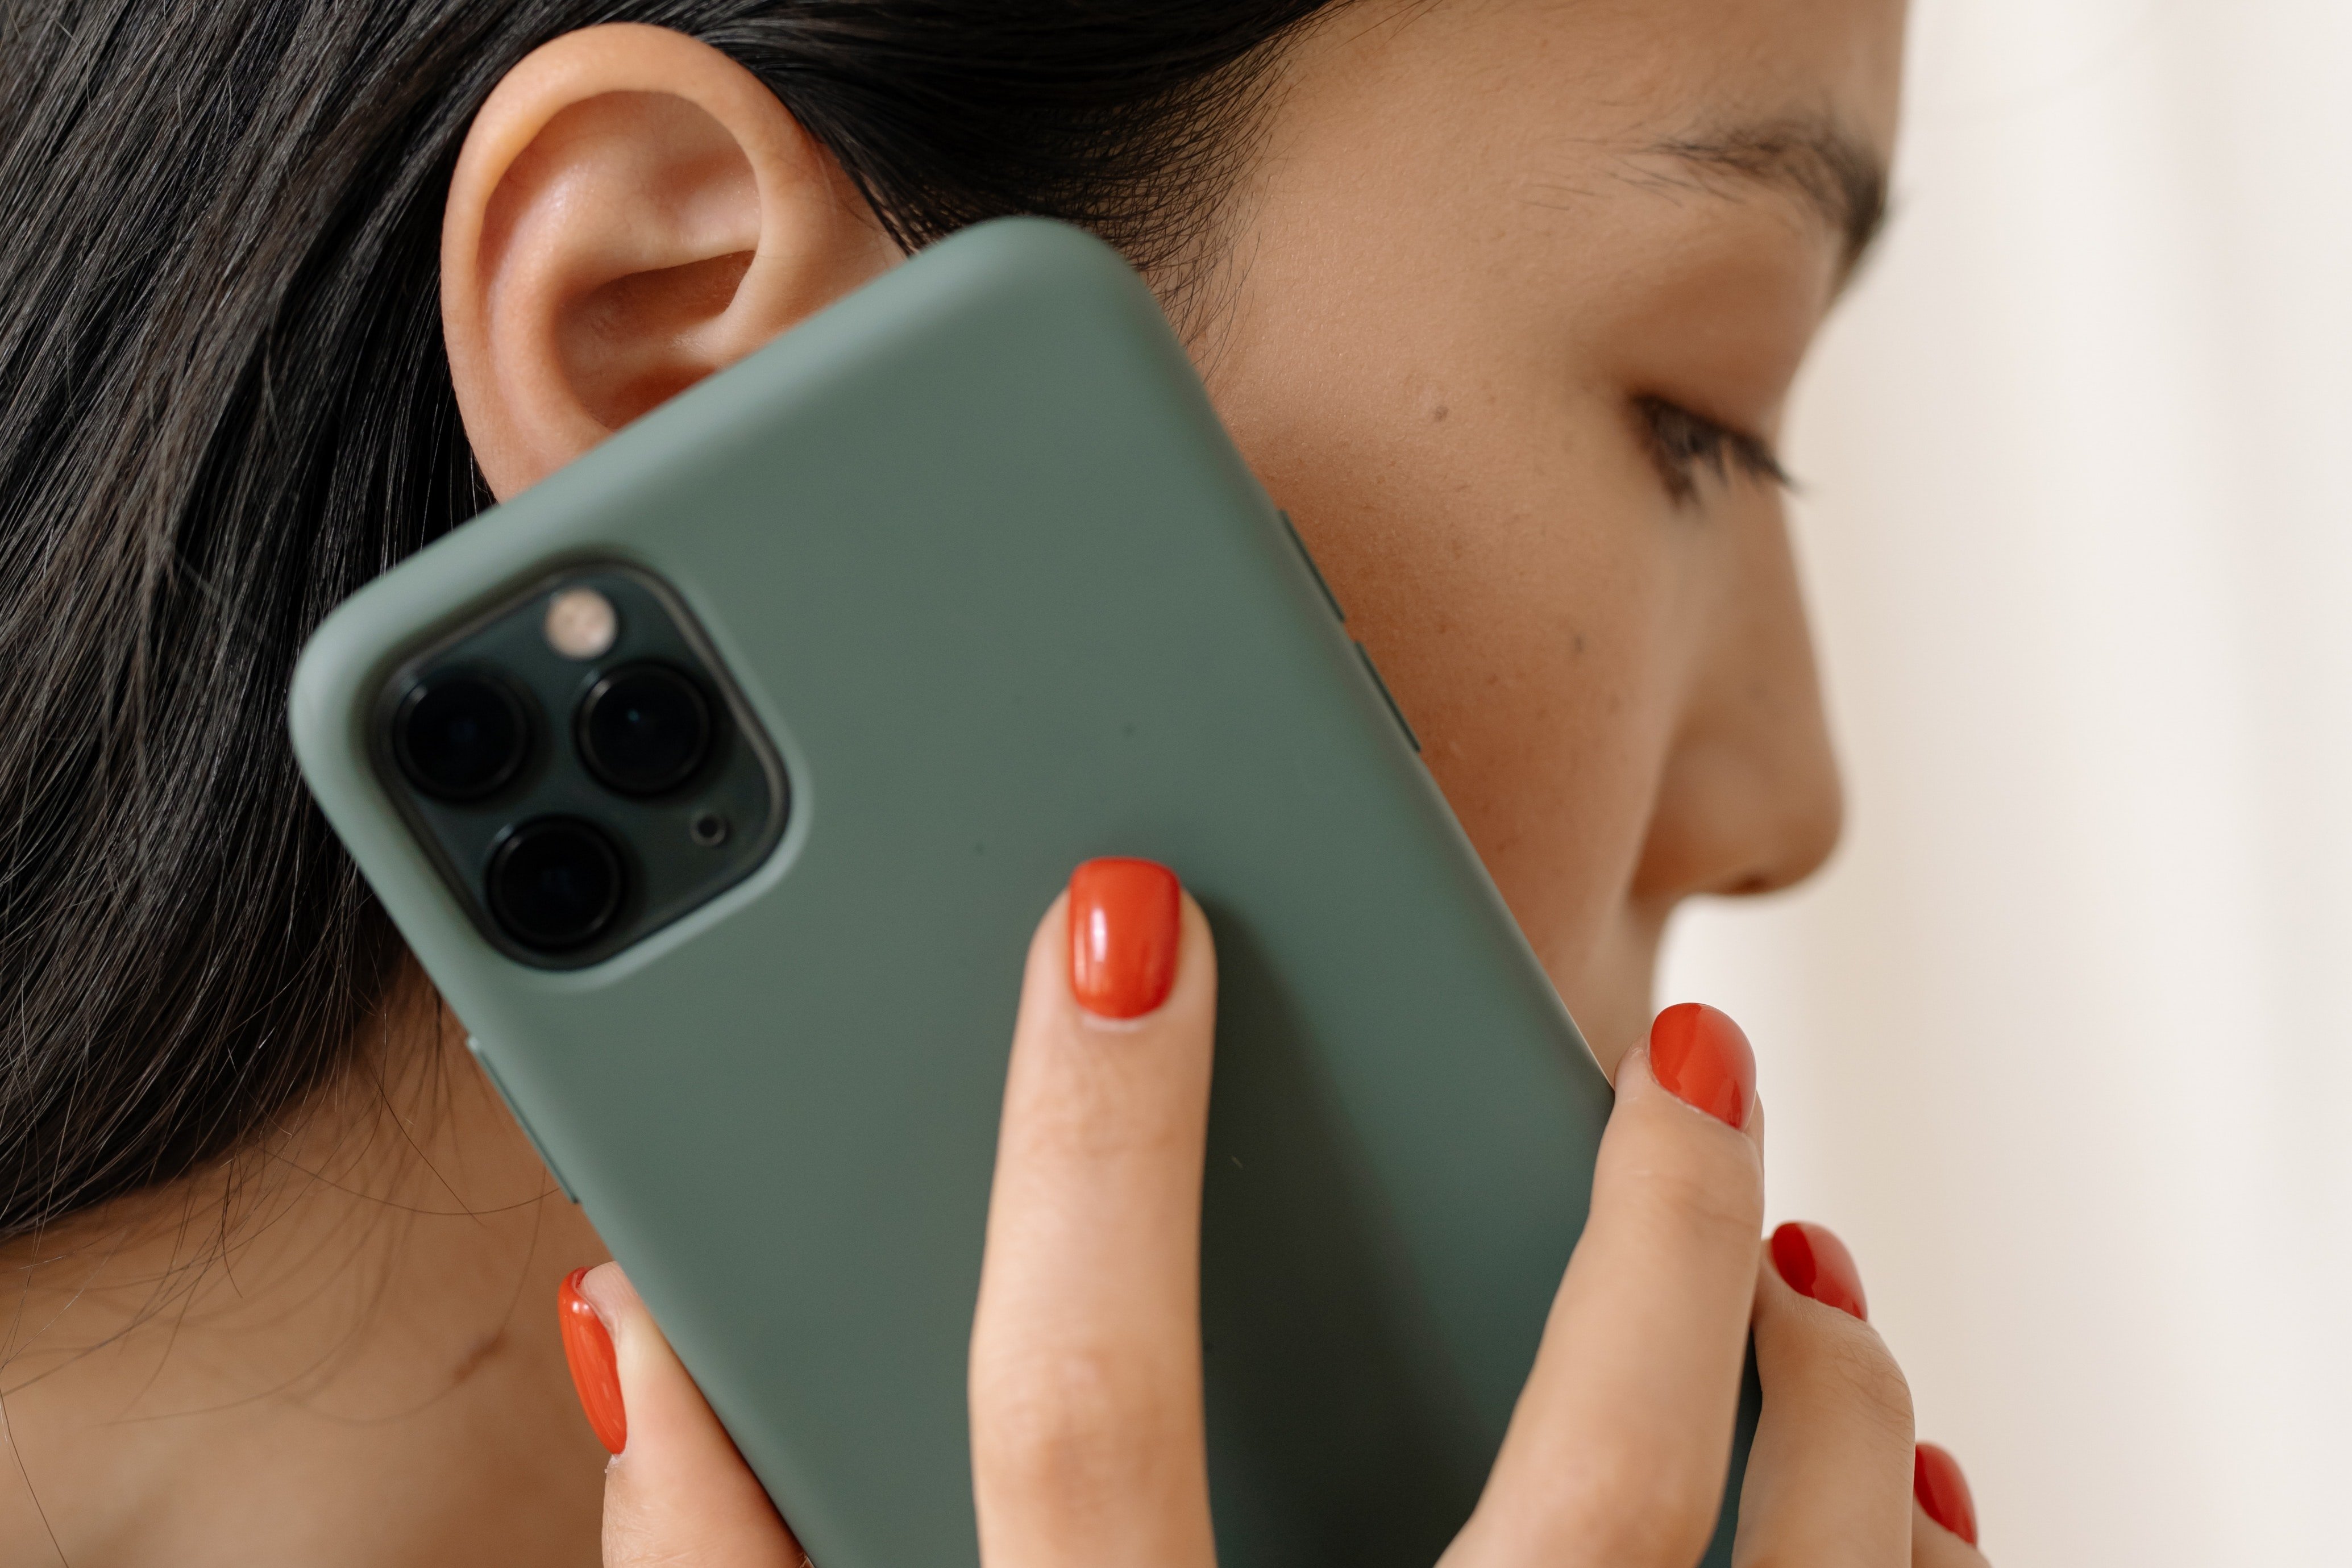 Mujer con un teléfono celular al oído. | Foto: Shutterstock